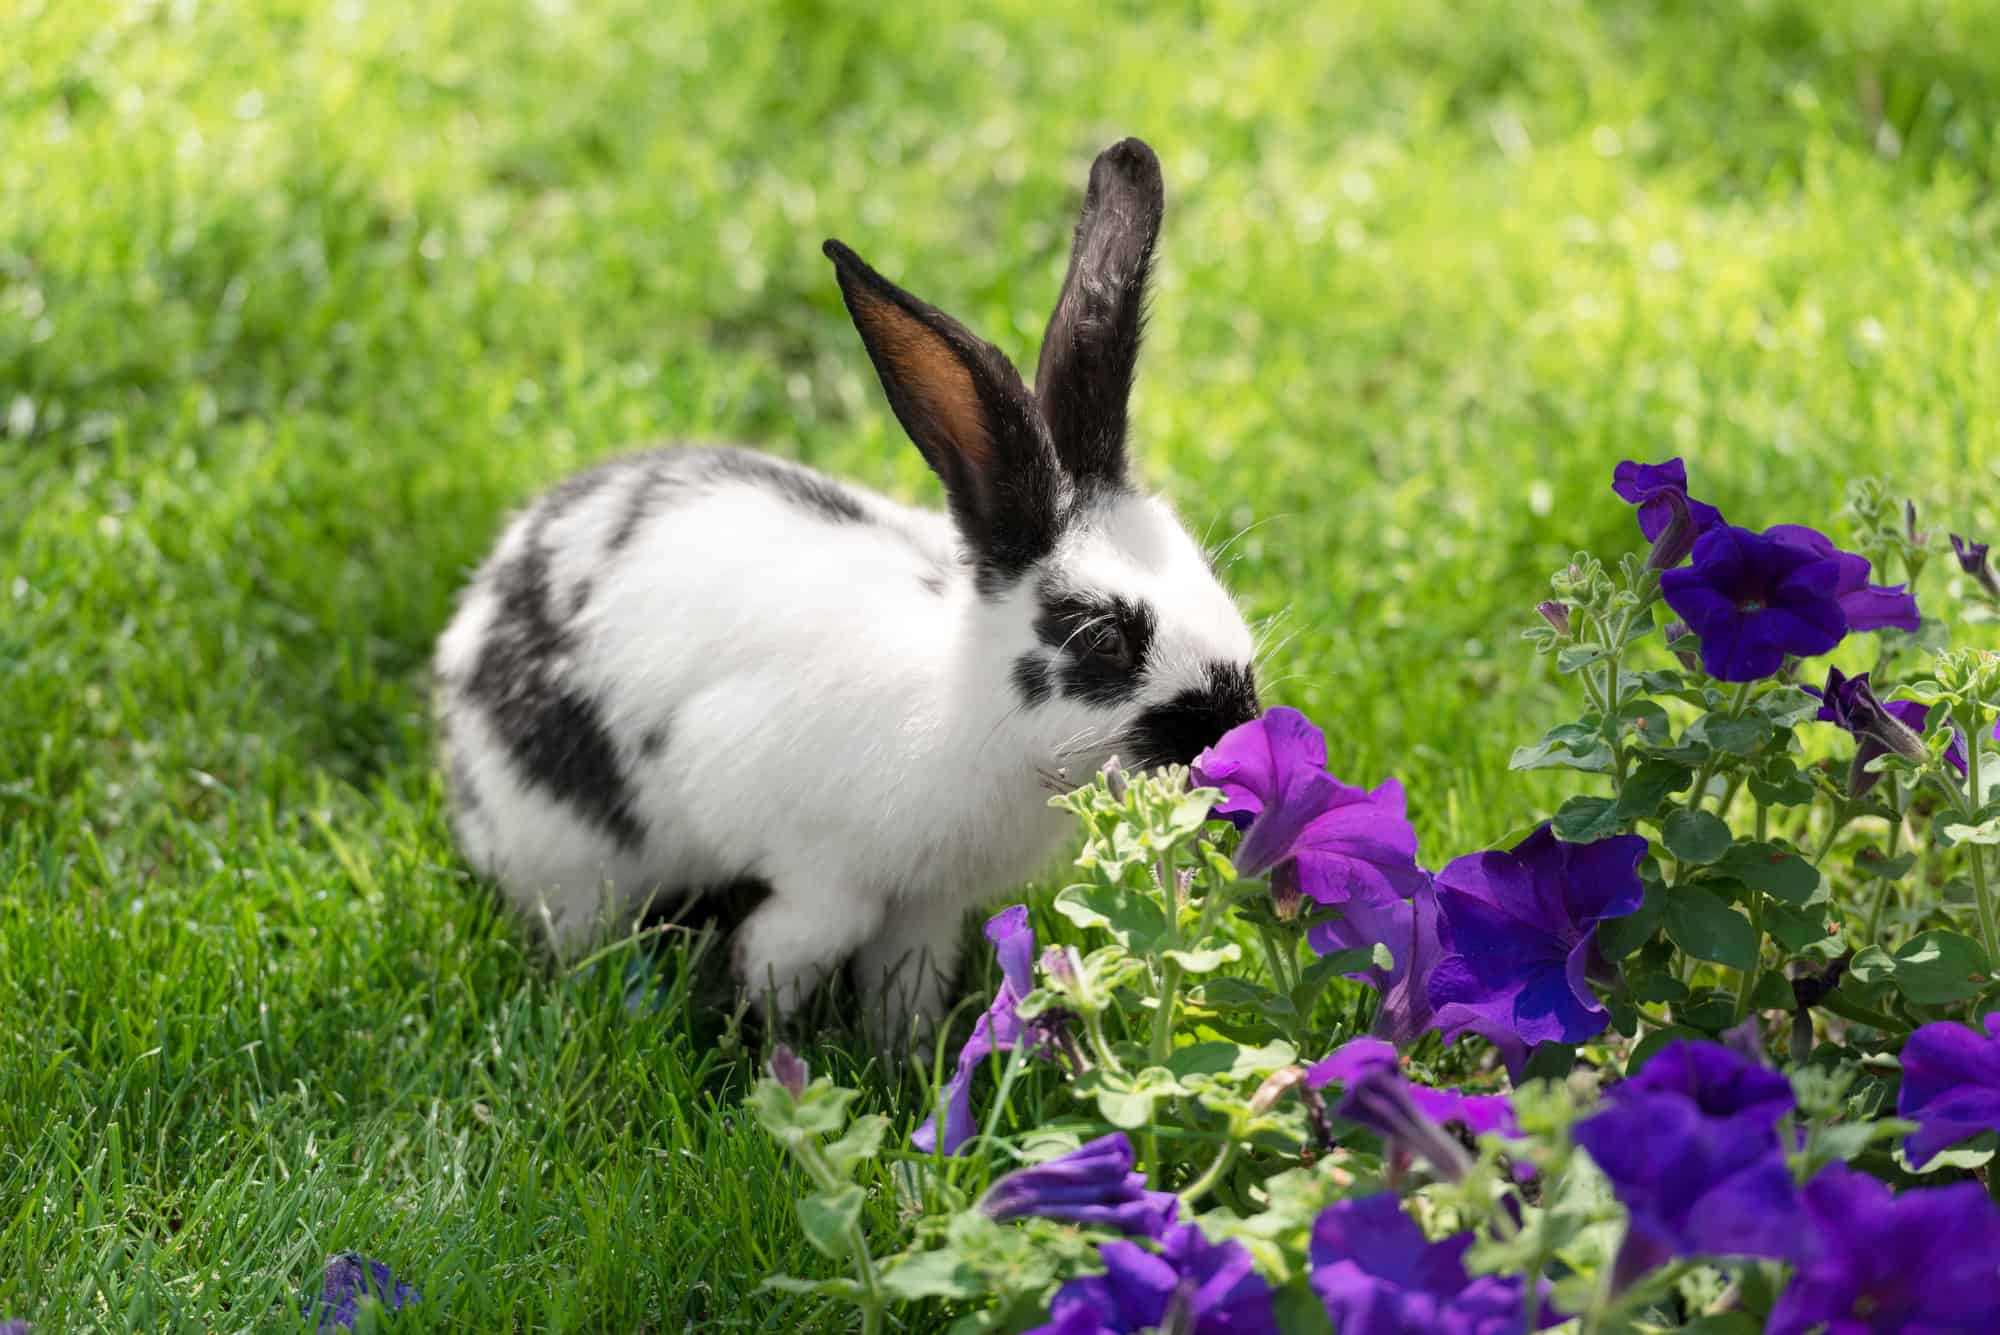 rabbit sniffing flowers.